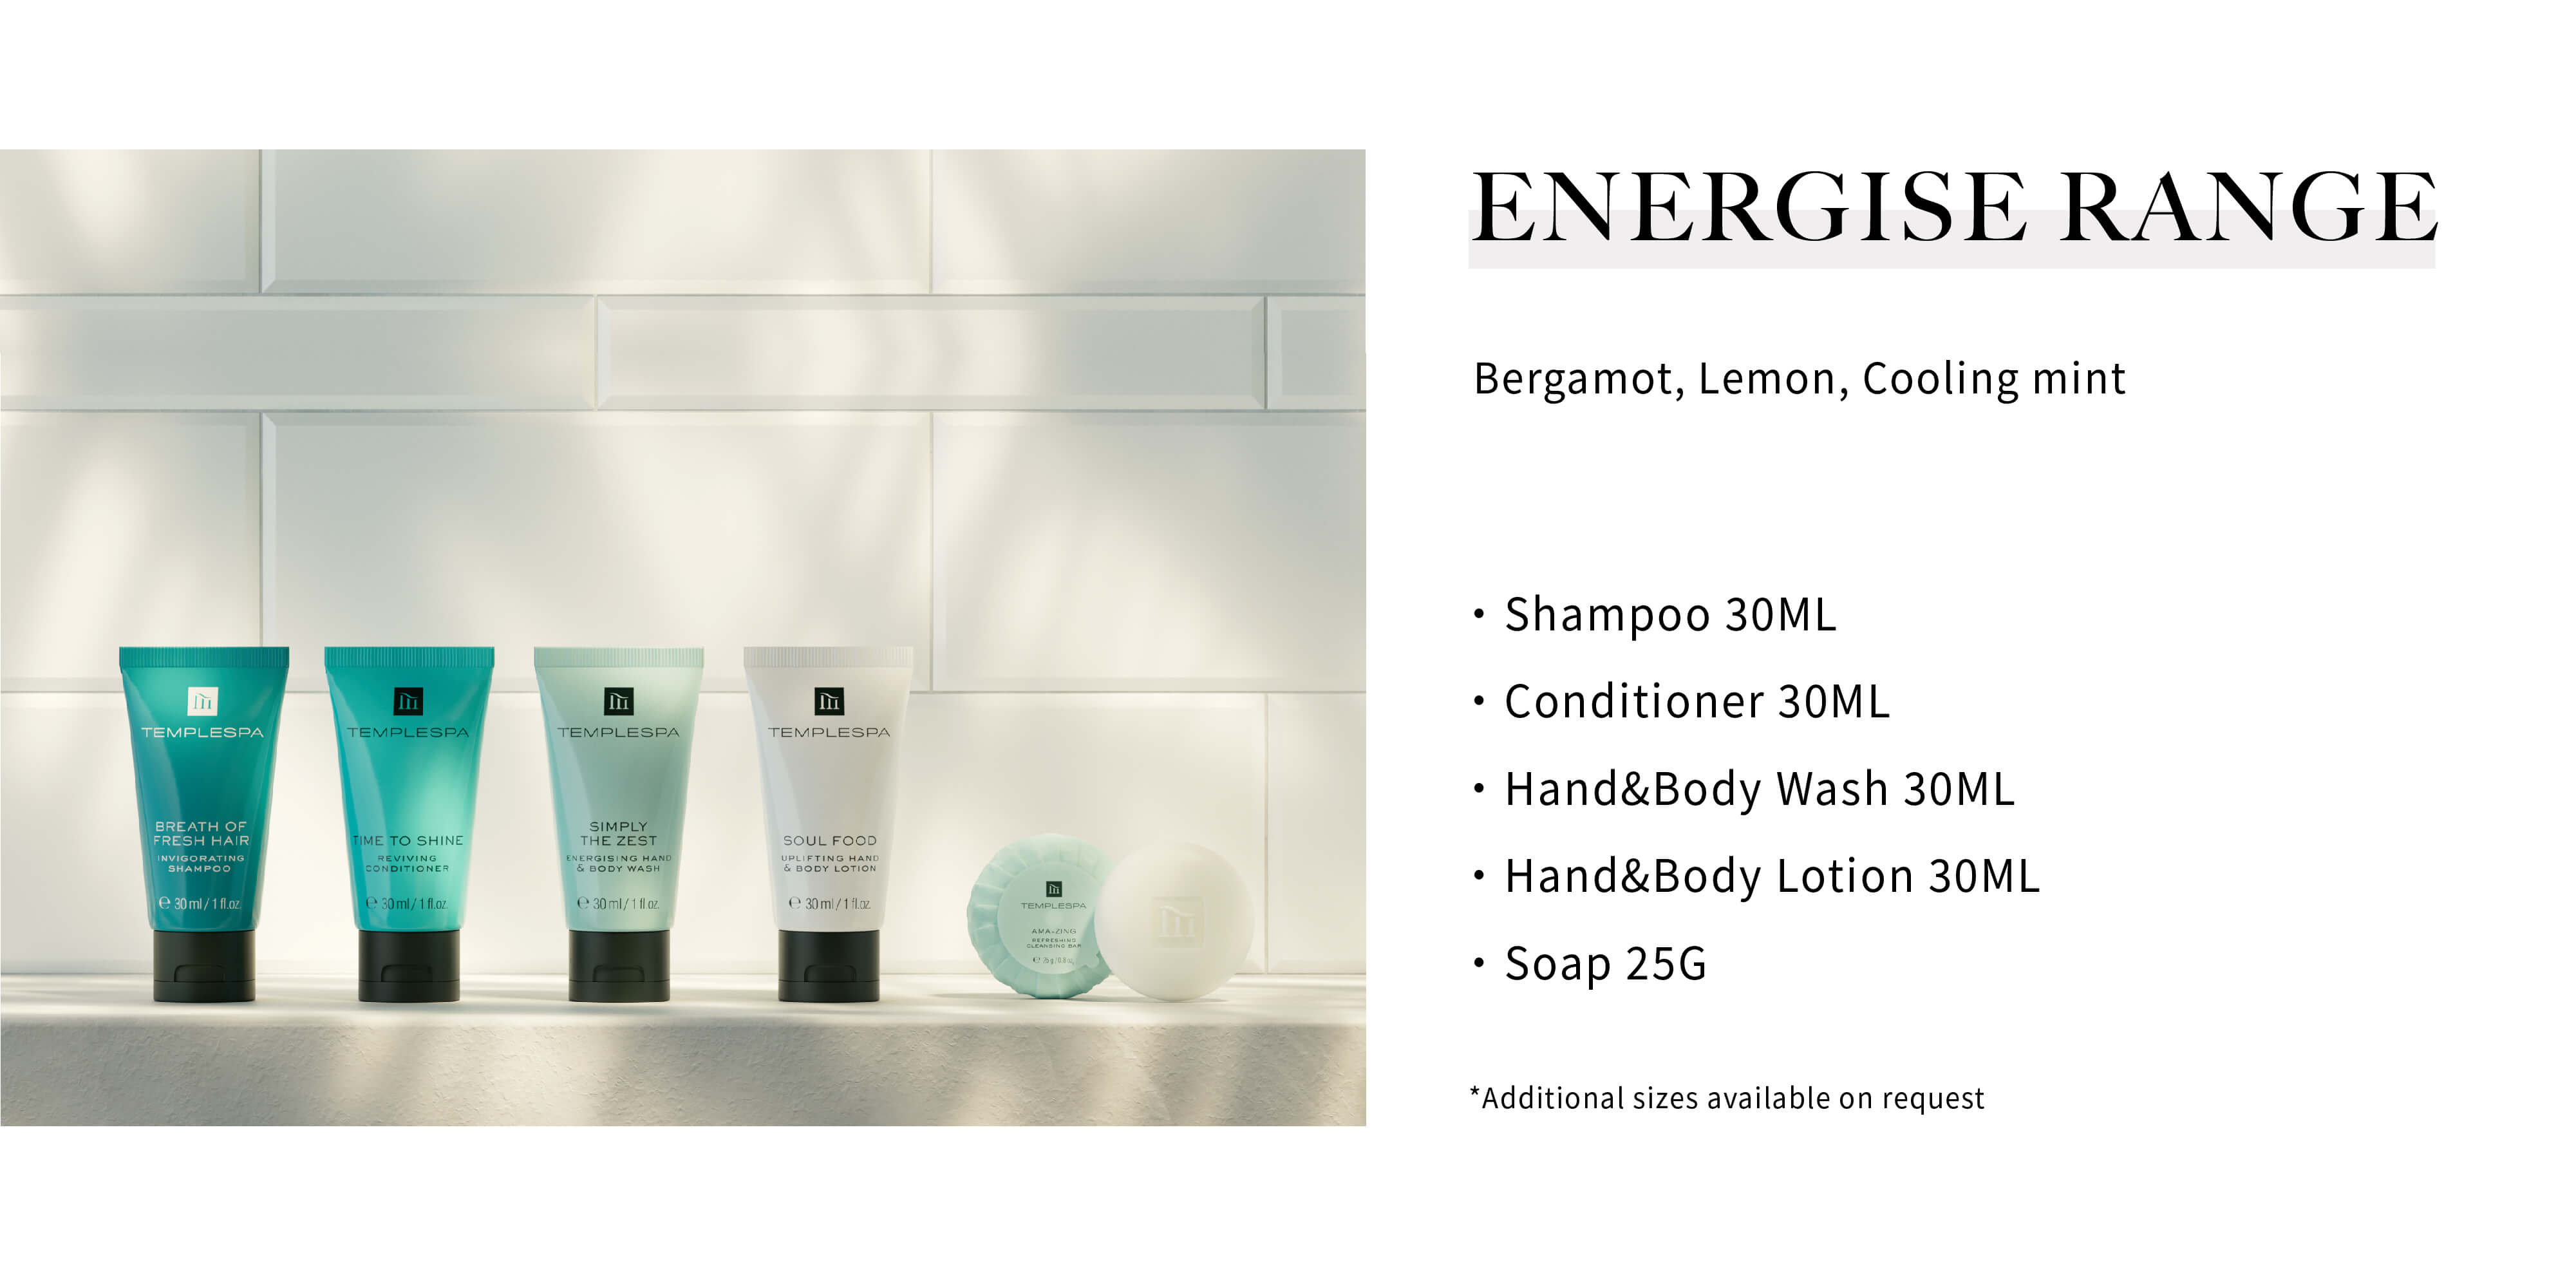 TEMPLESPA的飯店沐浴用品ENERGISE RANGE系列，由Sunlife晨居飯店沐浴備品廠商供應